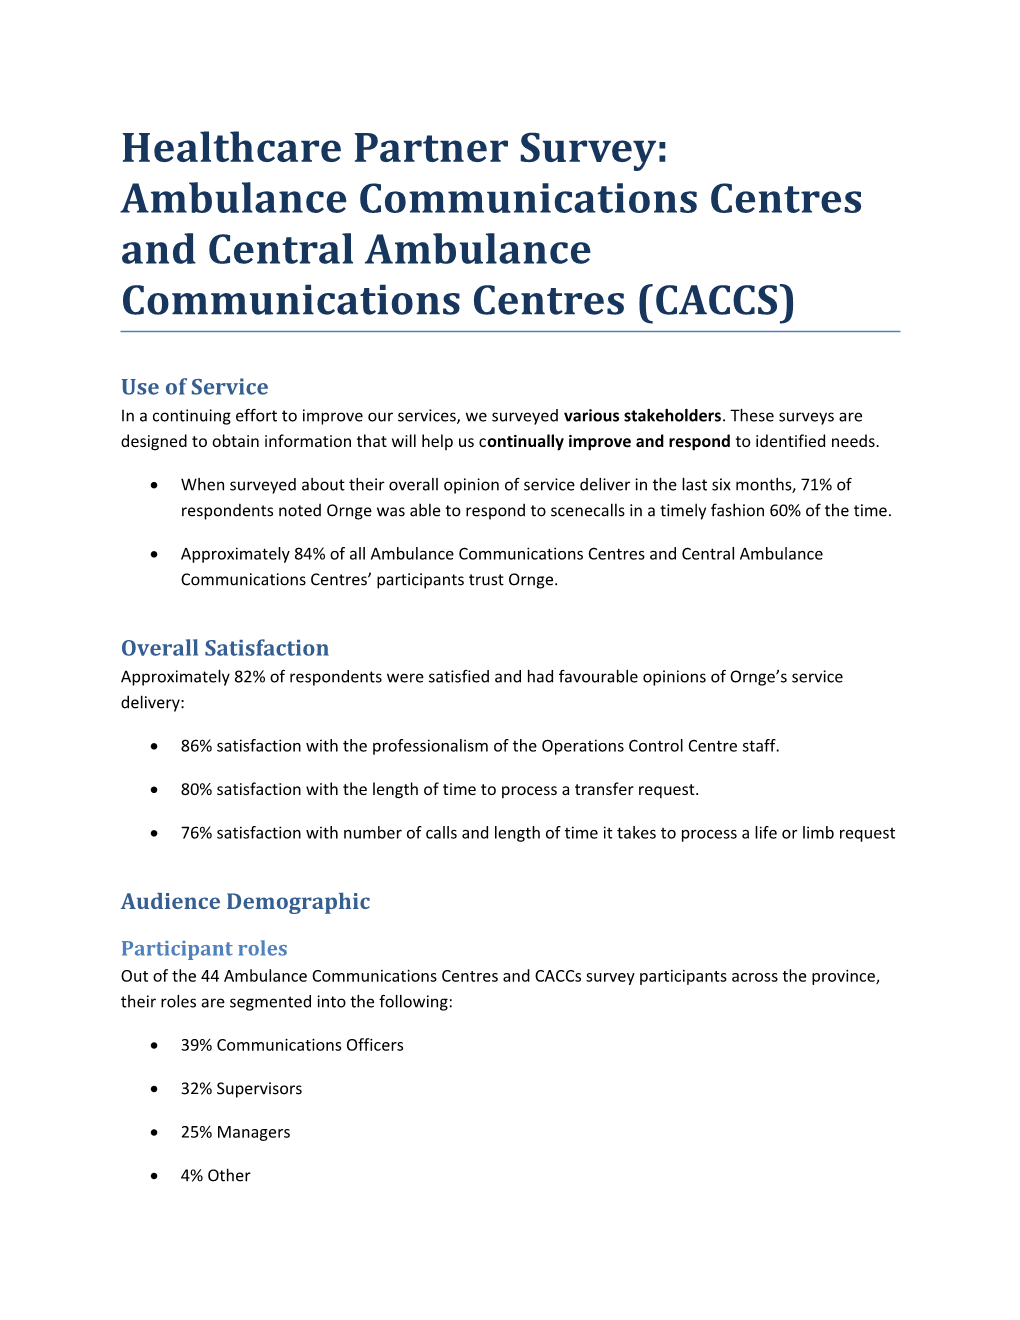 Healthcare Partner Survey: Ambulance Communications Centres and Central Ambulance Communications